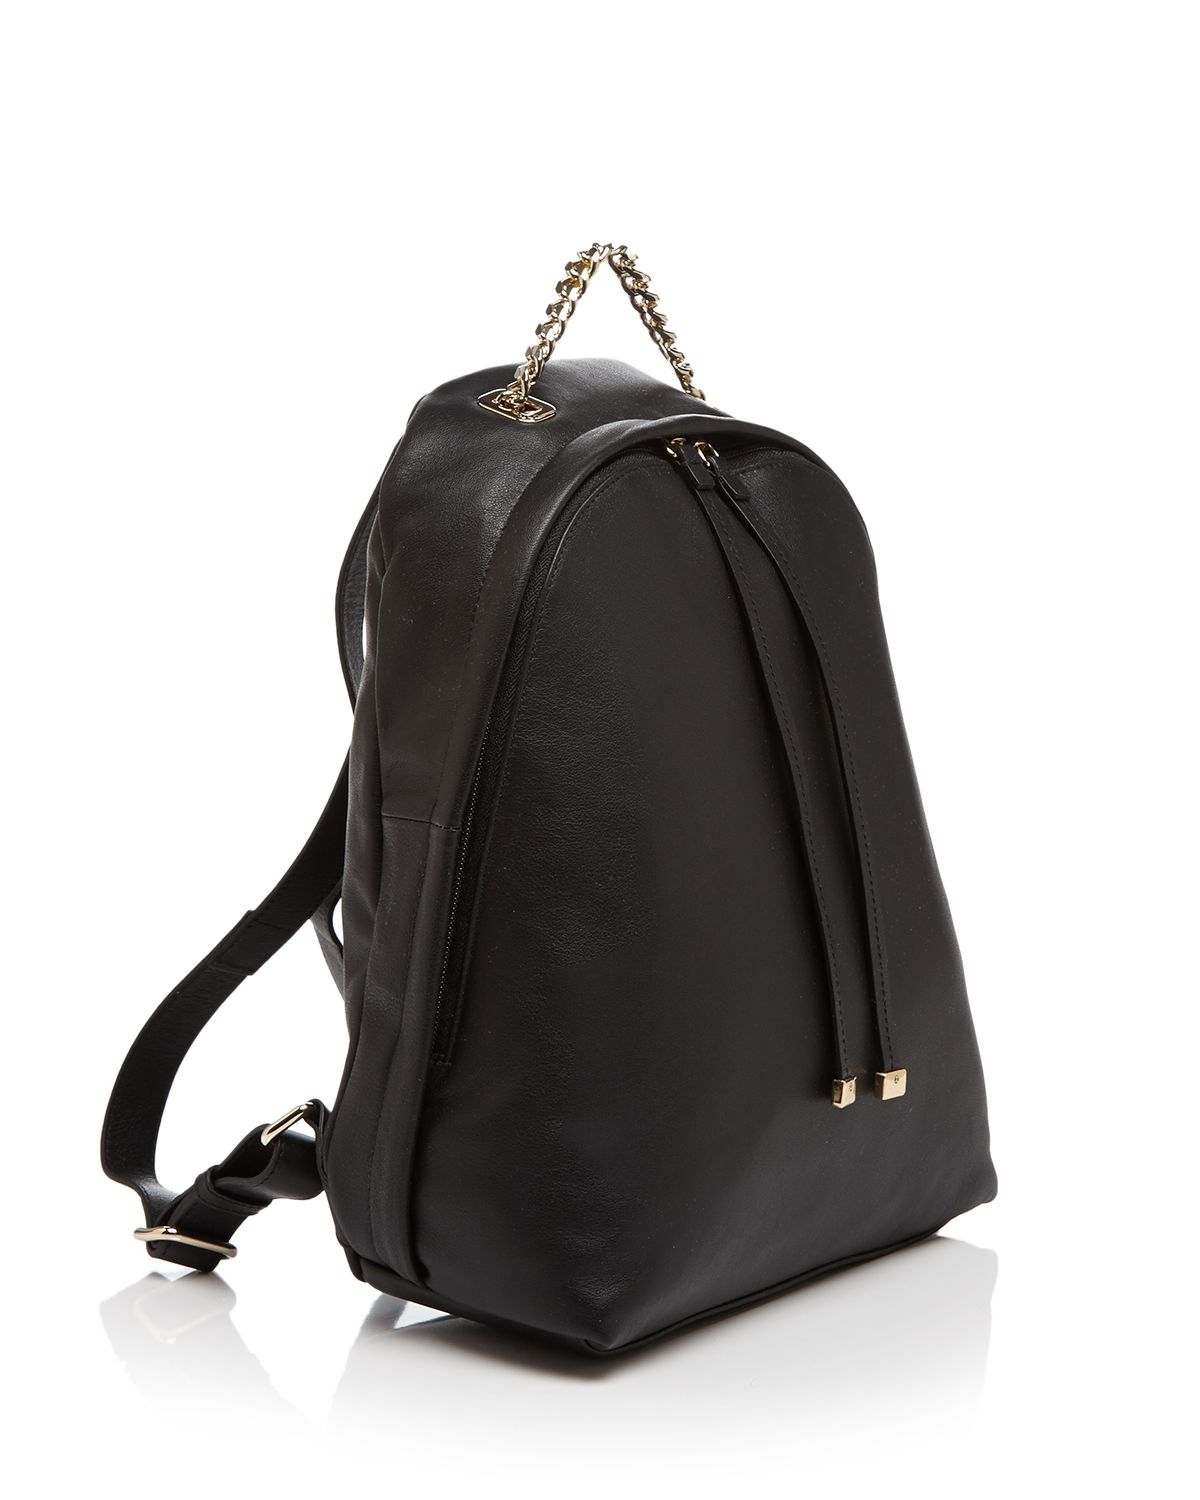 Lyst - Furla Backpack - Spy Bag Small in Black